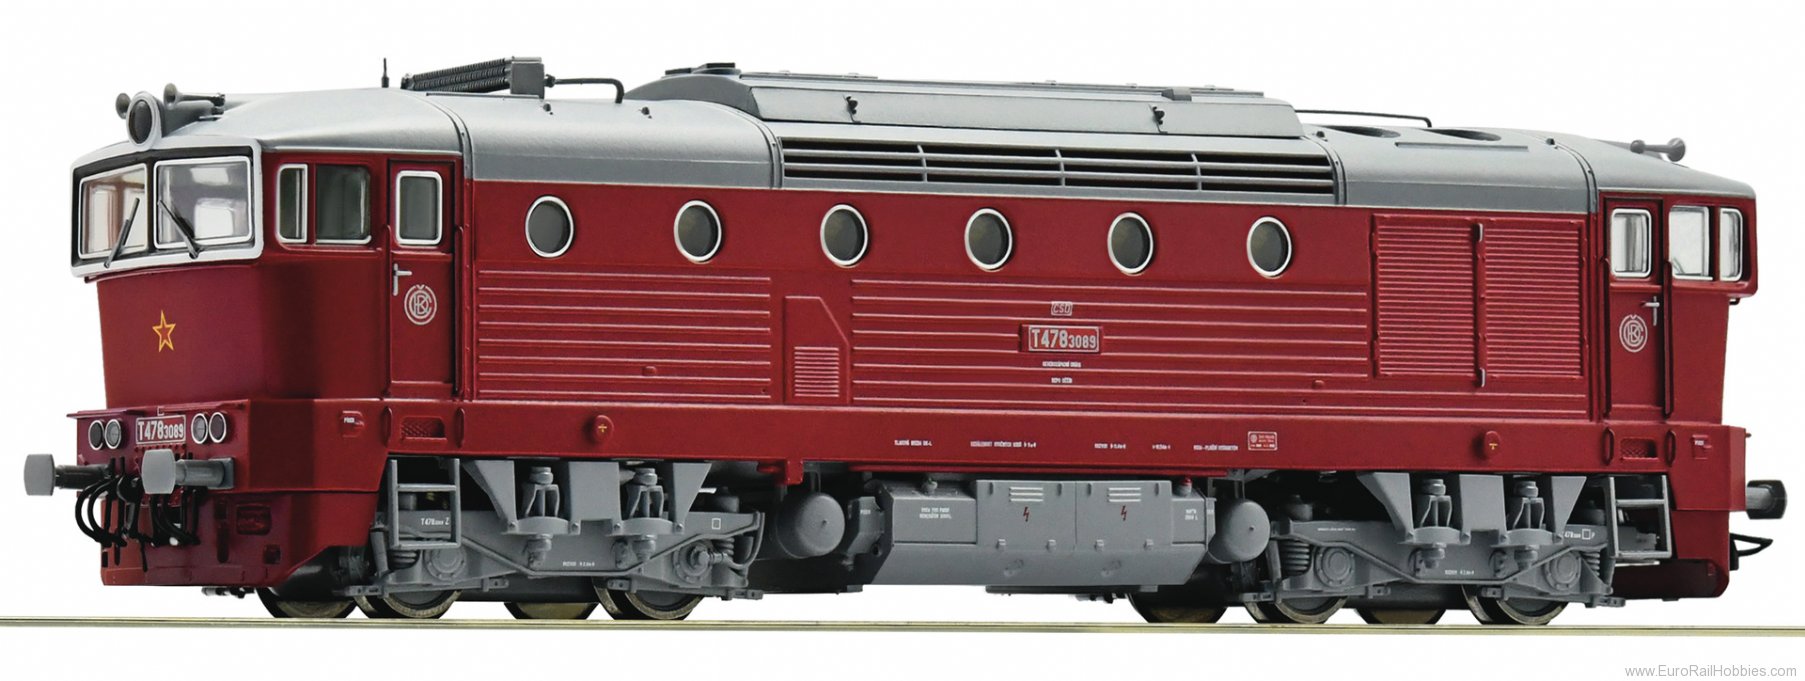 Roco 71021 CSD Diesel locomotive T 478.3089,  DCC w/Soun